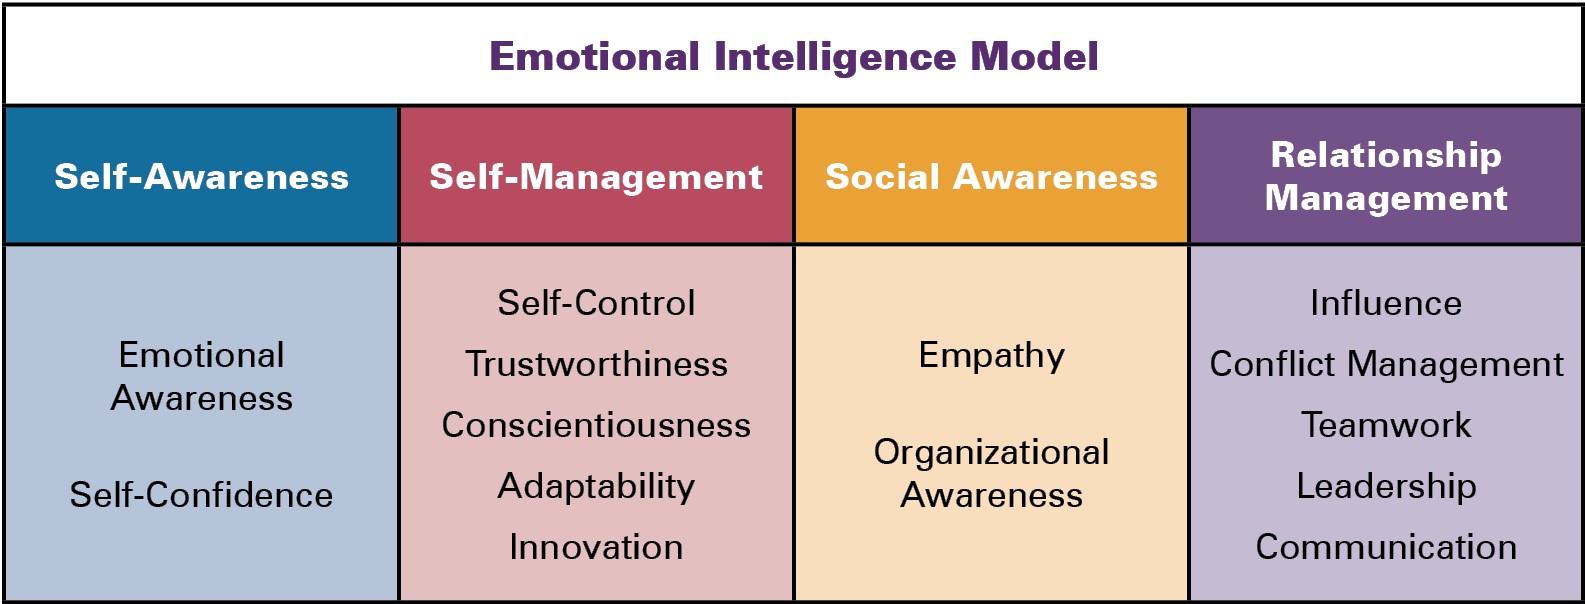 Emotional Intelligence Model chart